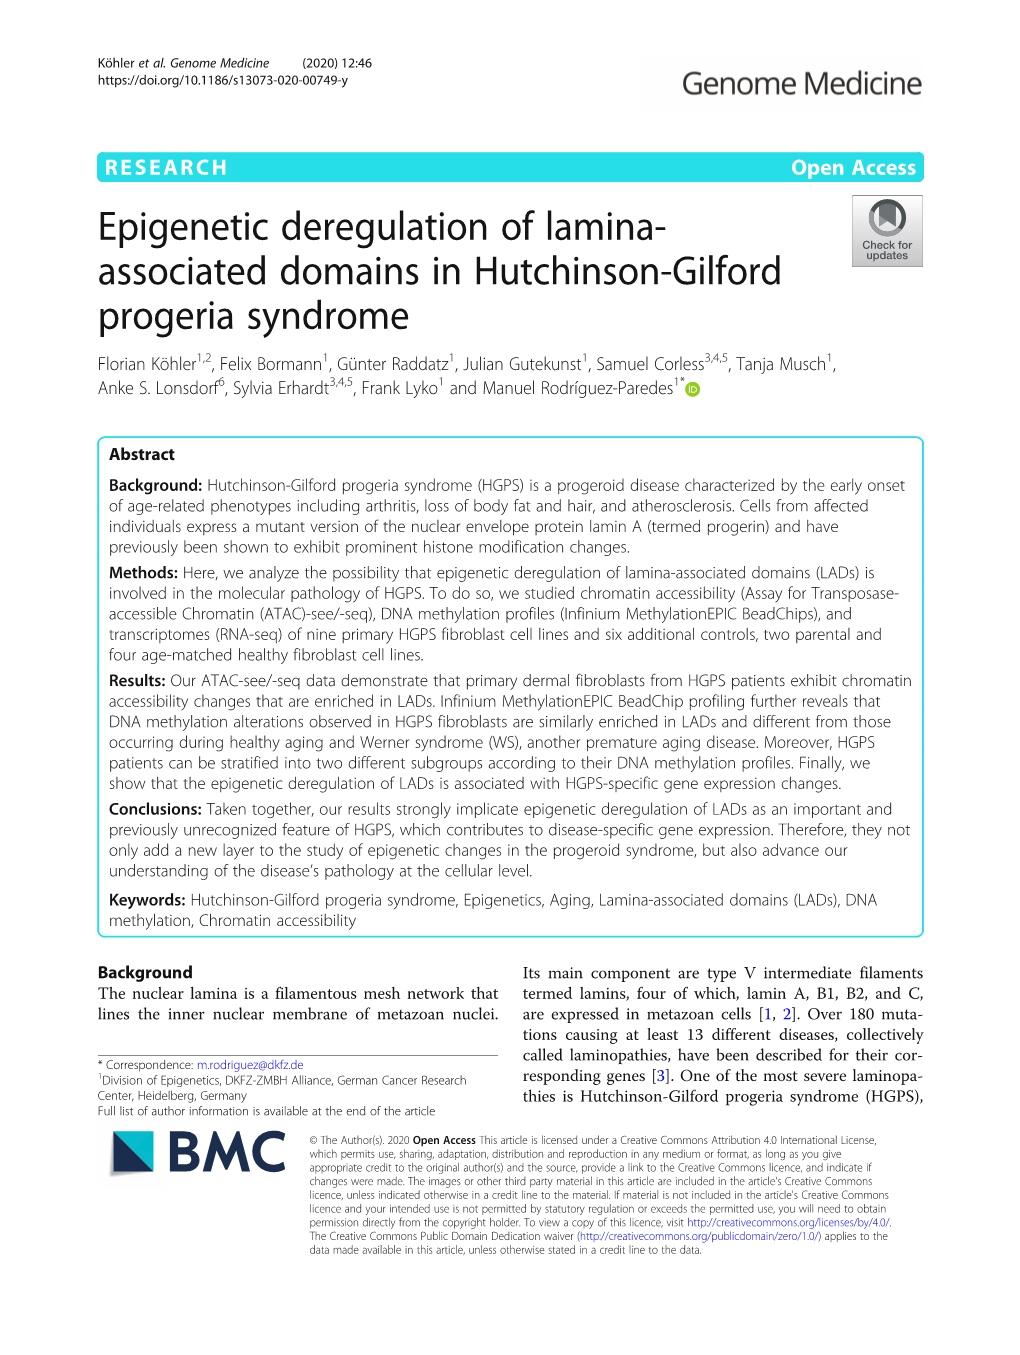 Epigenetic Deregulation of Lamina-Associated Domains in Hutchinson-Gilford Et Al